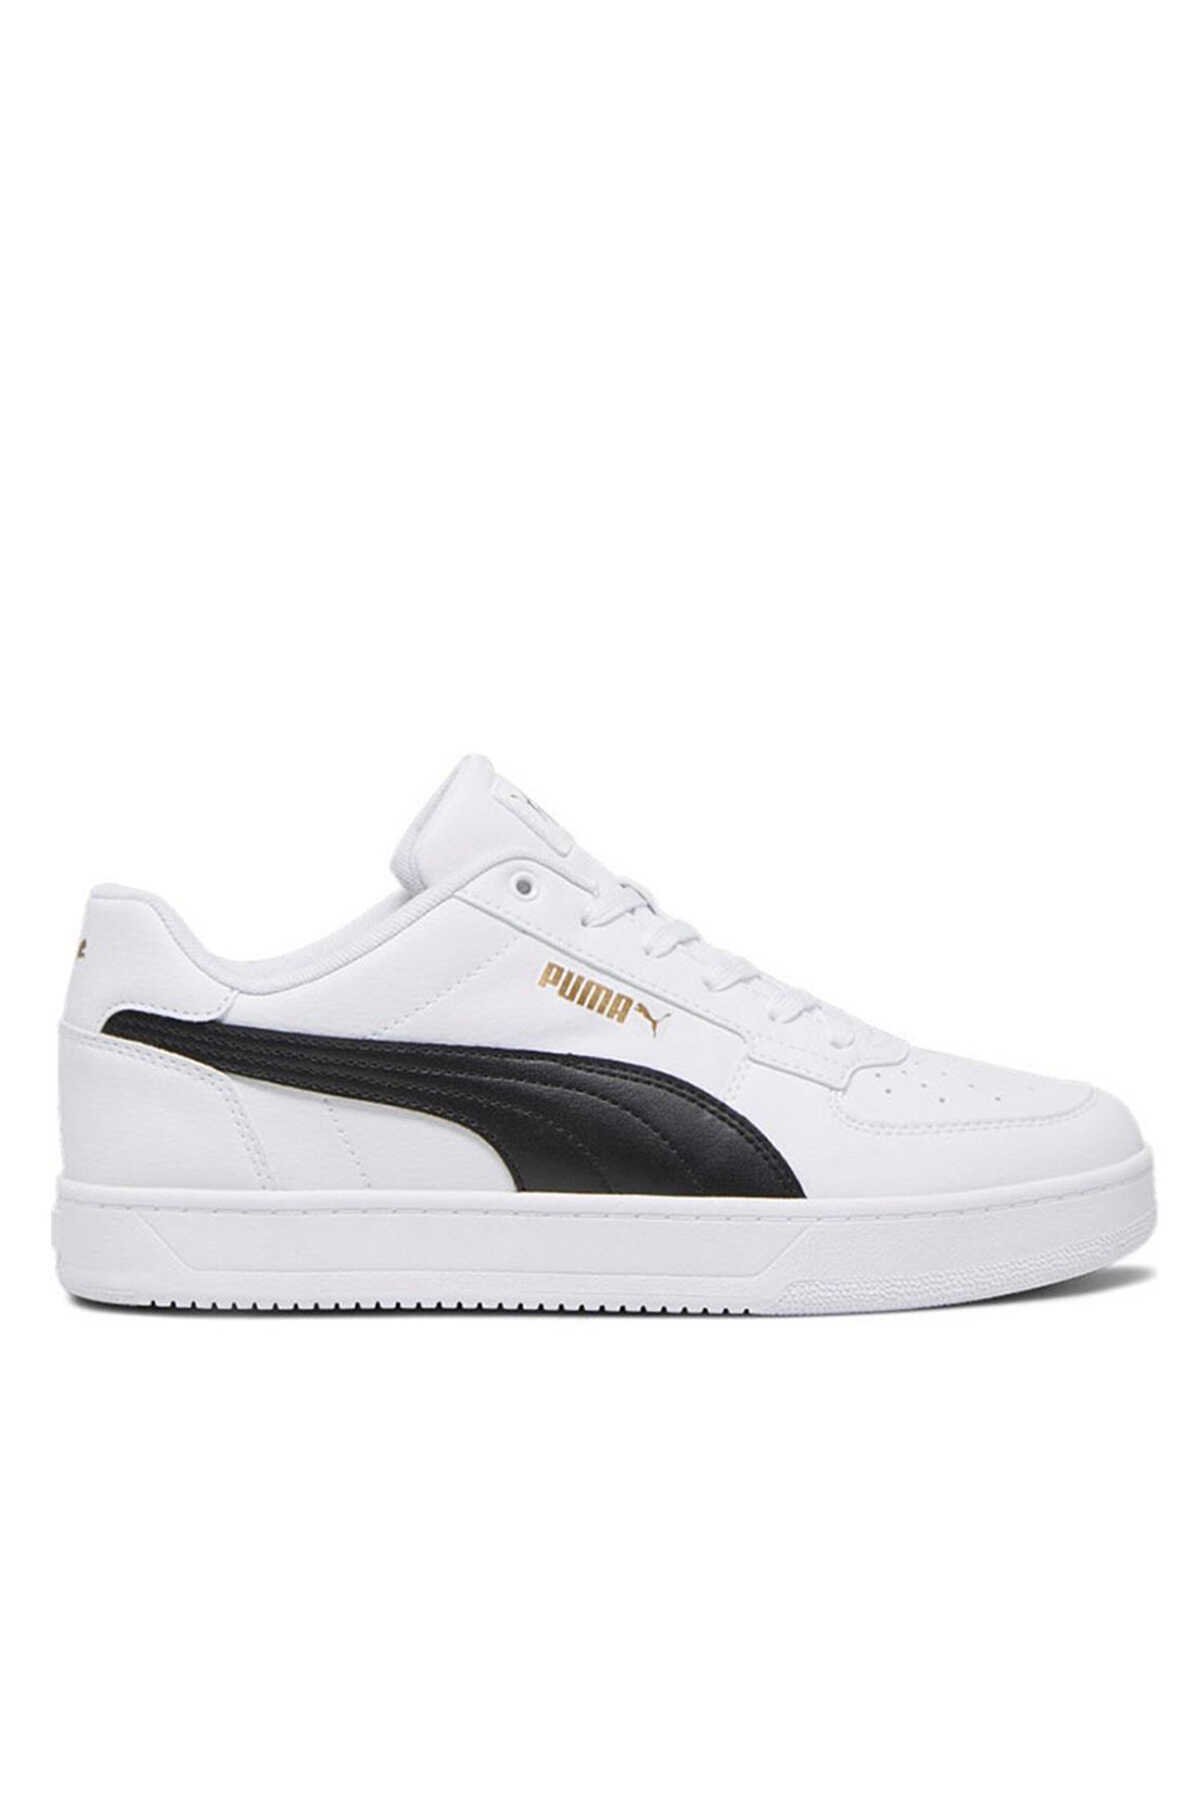 Puma - Puma Caven 2.0 Unisex Sneaker Ayakkabı Beyaz / Siyah